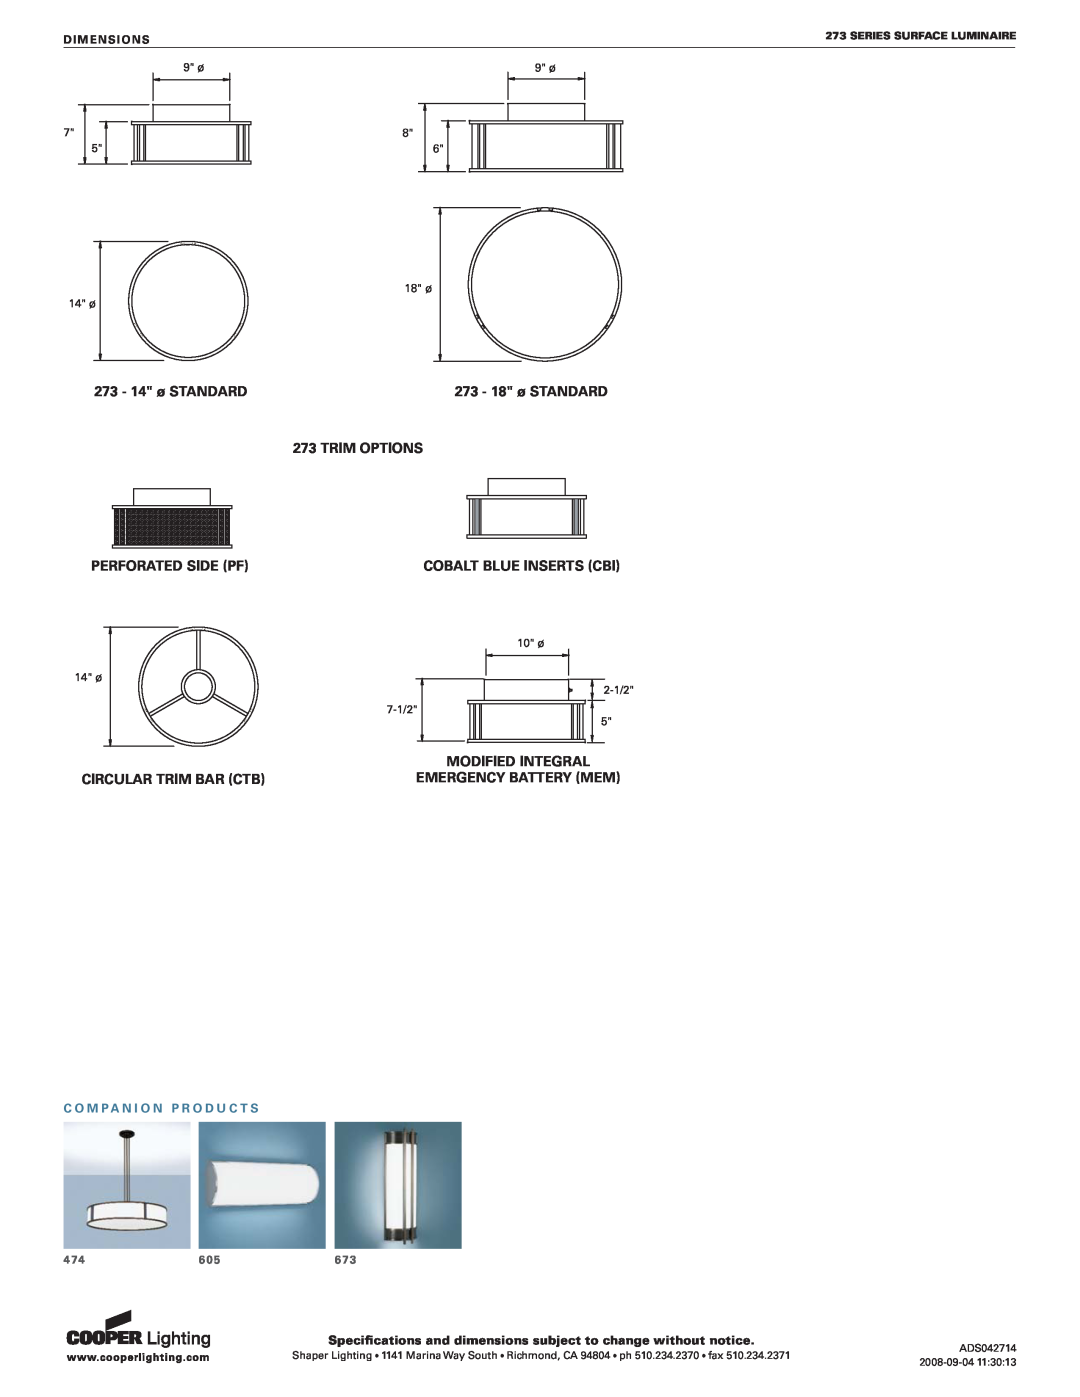 Cooper Lighting 273 - 14 ø STANDARD, Trim Options, Perforated Side Pf, Modified Integral, Circular Trim Bar Ctb, 7-1/2 